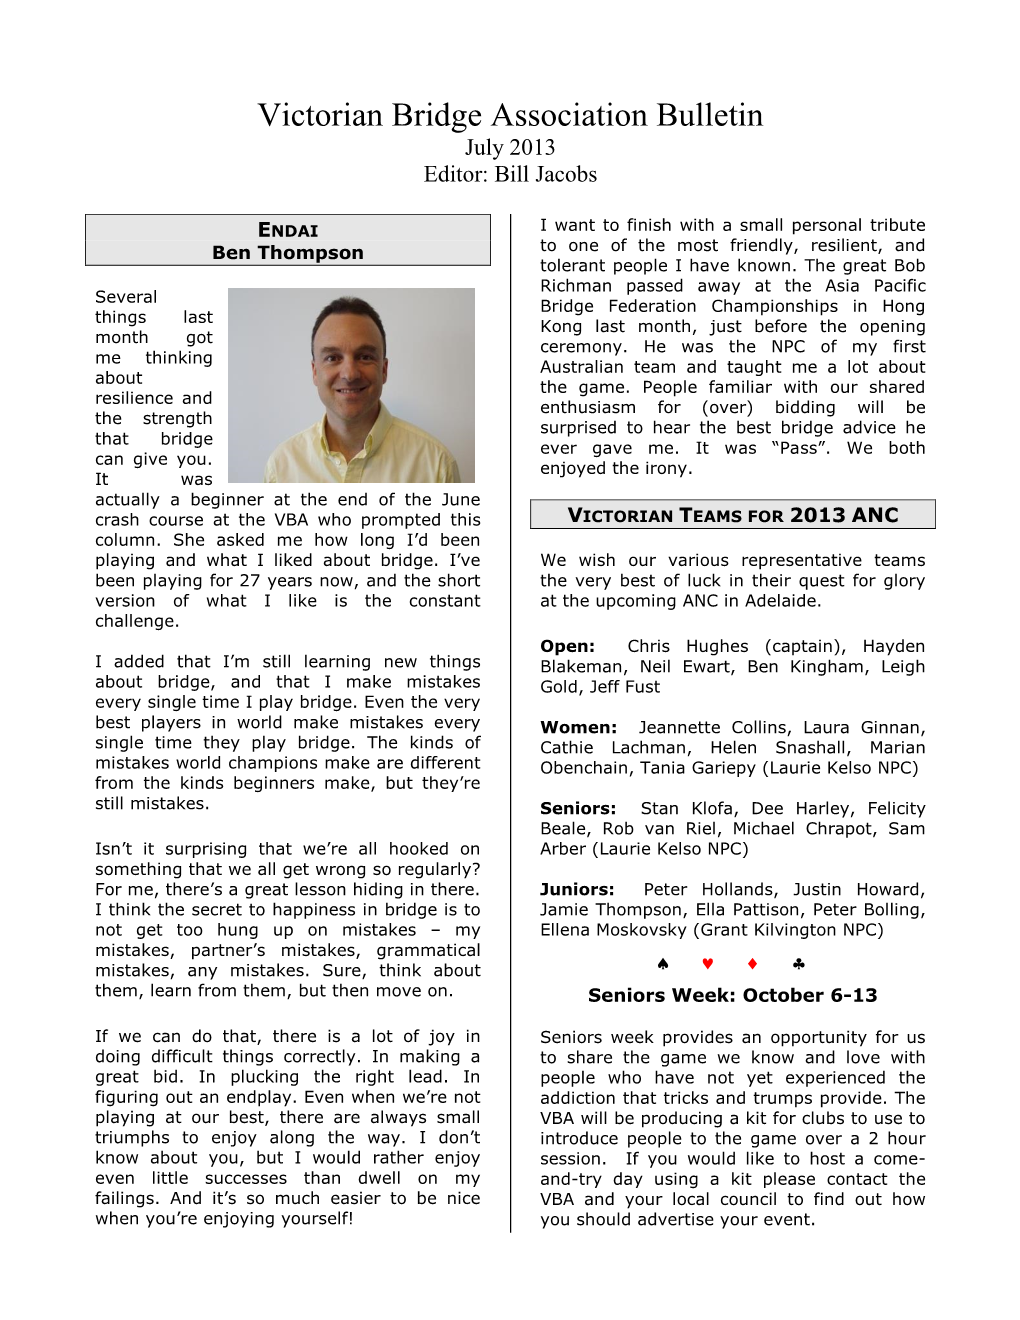 VBA Bulletin July 2013